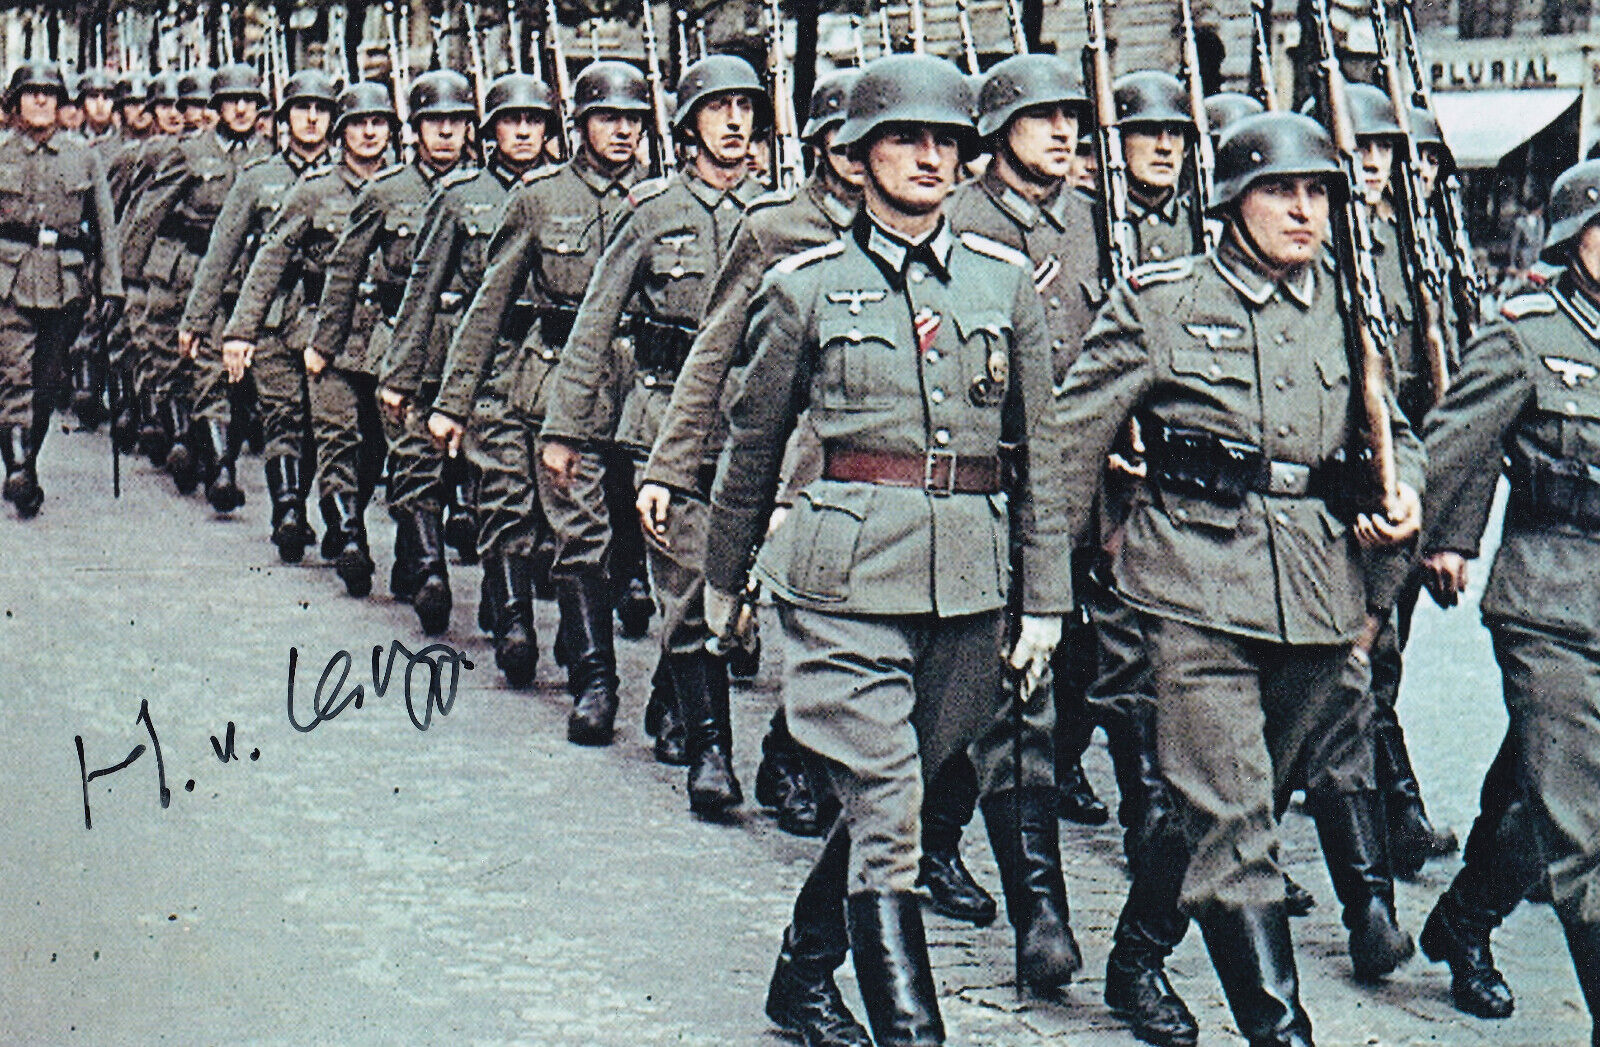 Hellmut von Leipzig Signed Autograph 4x6 Photo Rommel's Driver Knights Cross